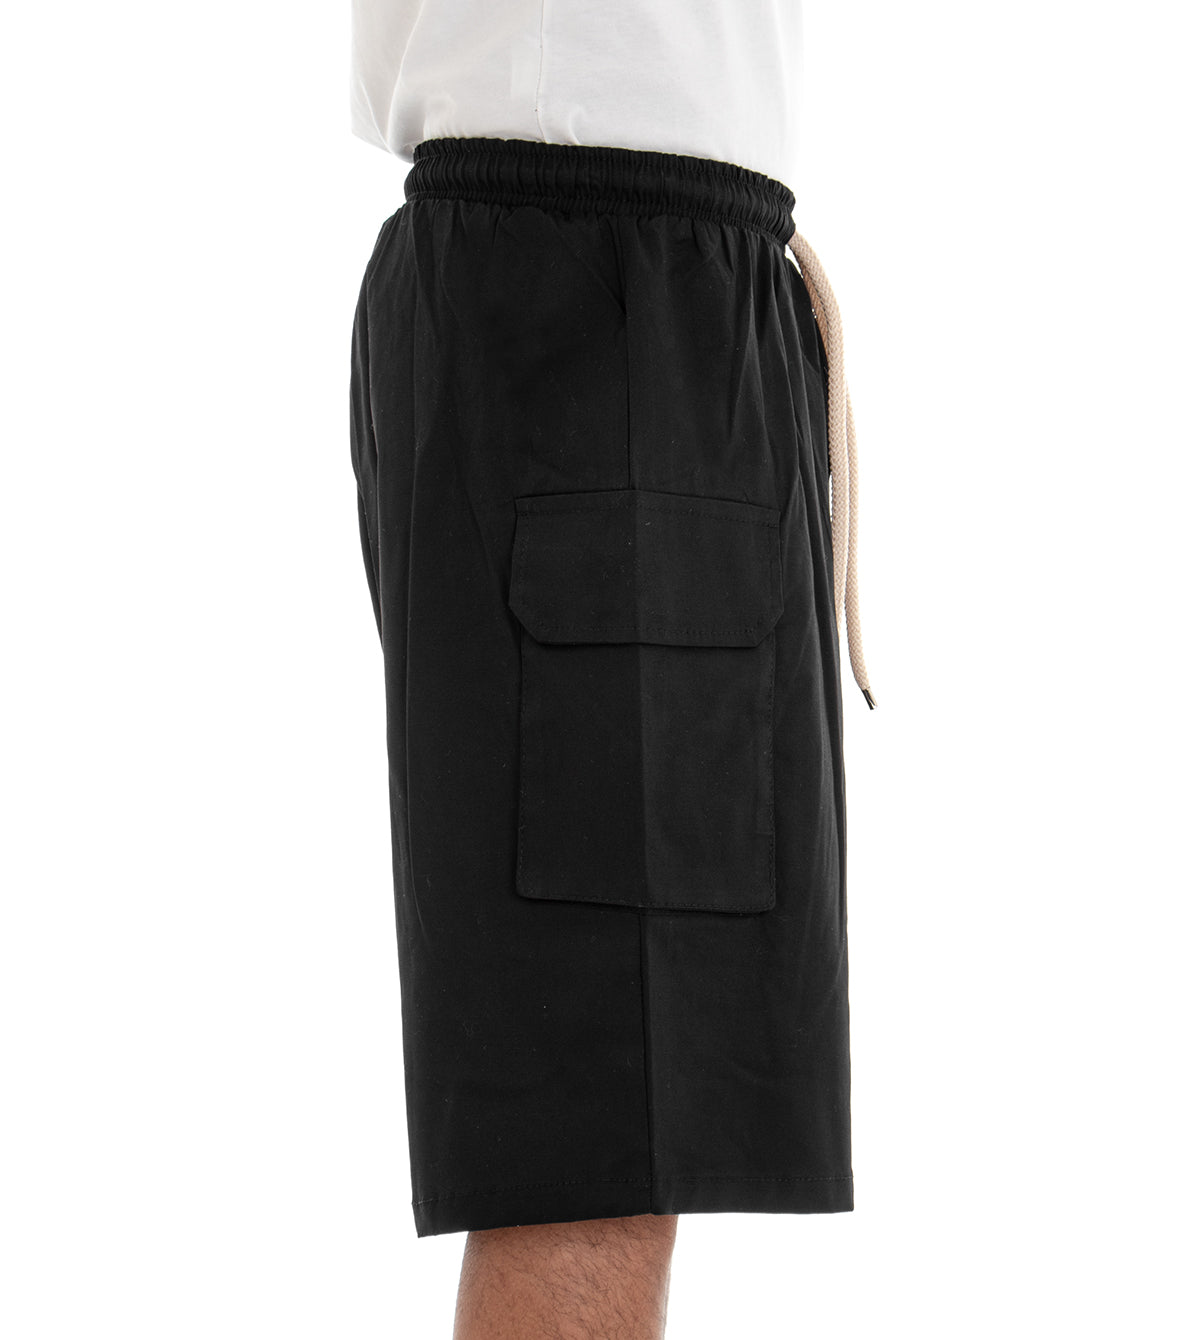 Men's Bermuda Shorts Black Low Crotch Shorts GIOSAL-PC1345A